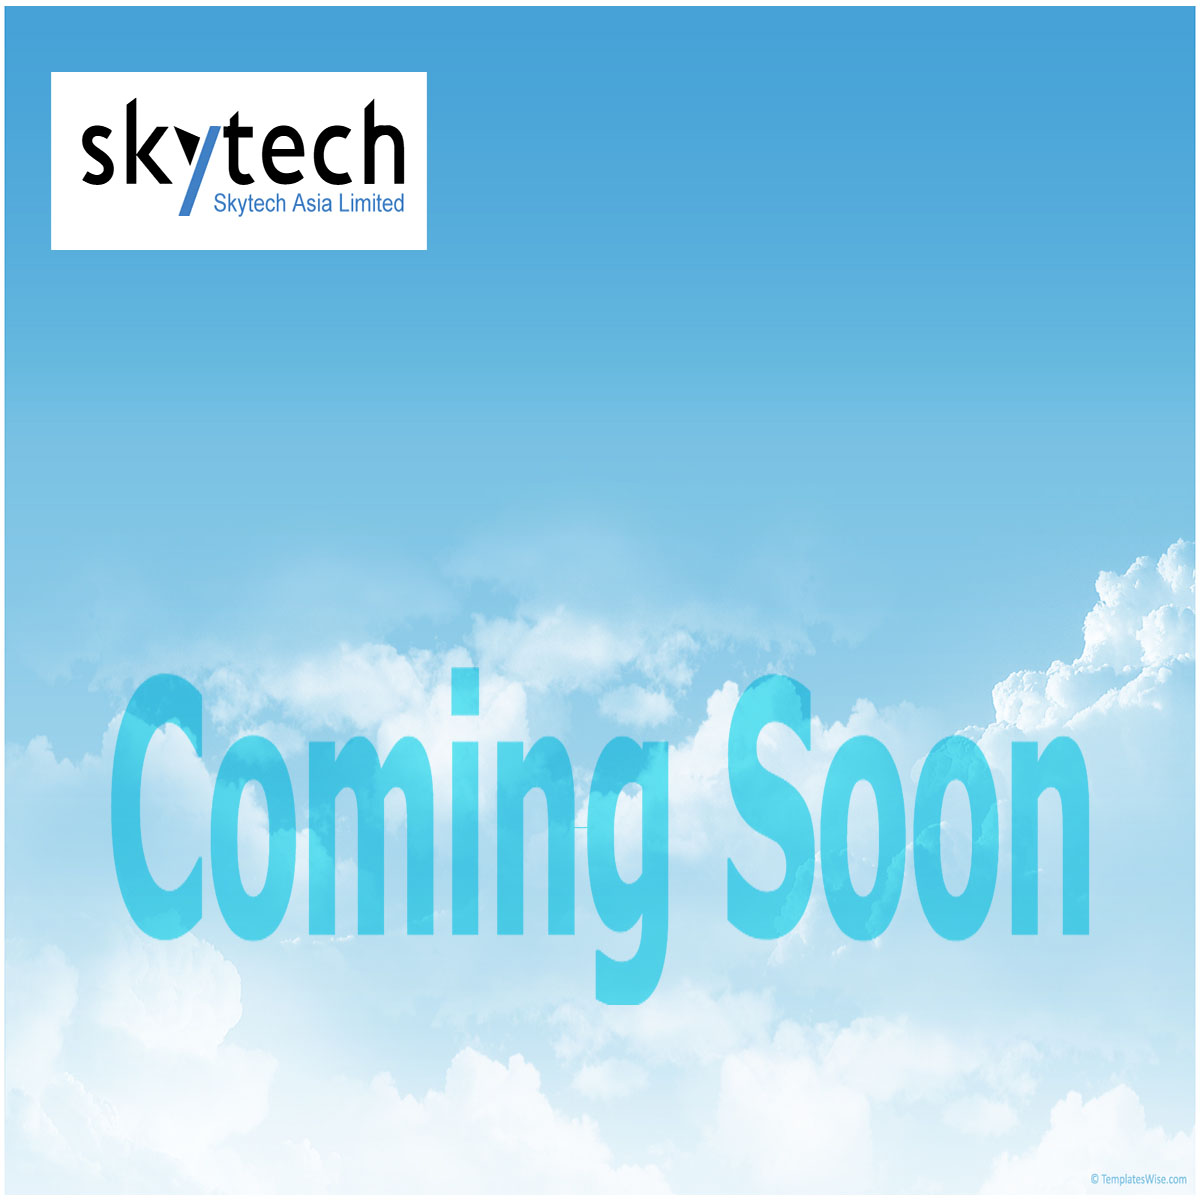 Skytech Asia Limited